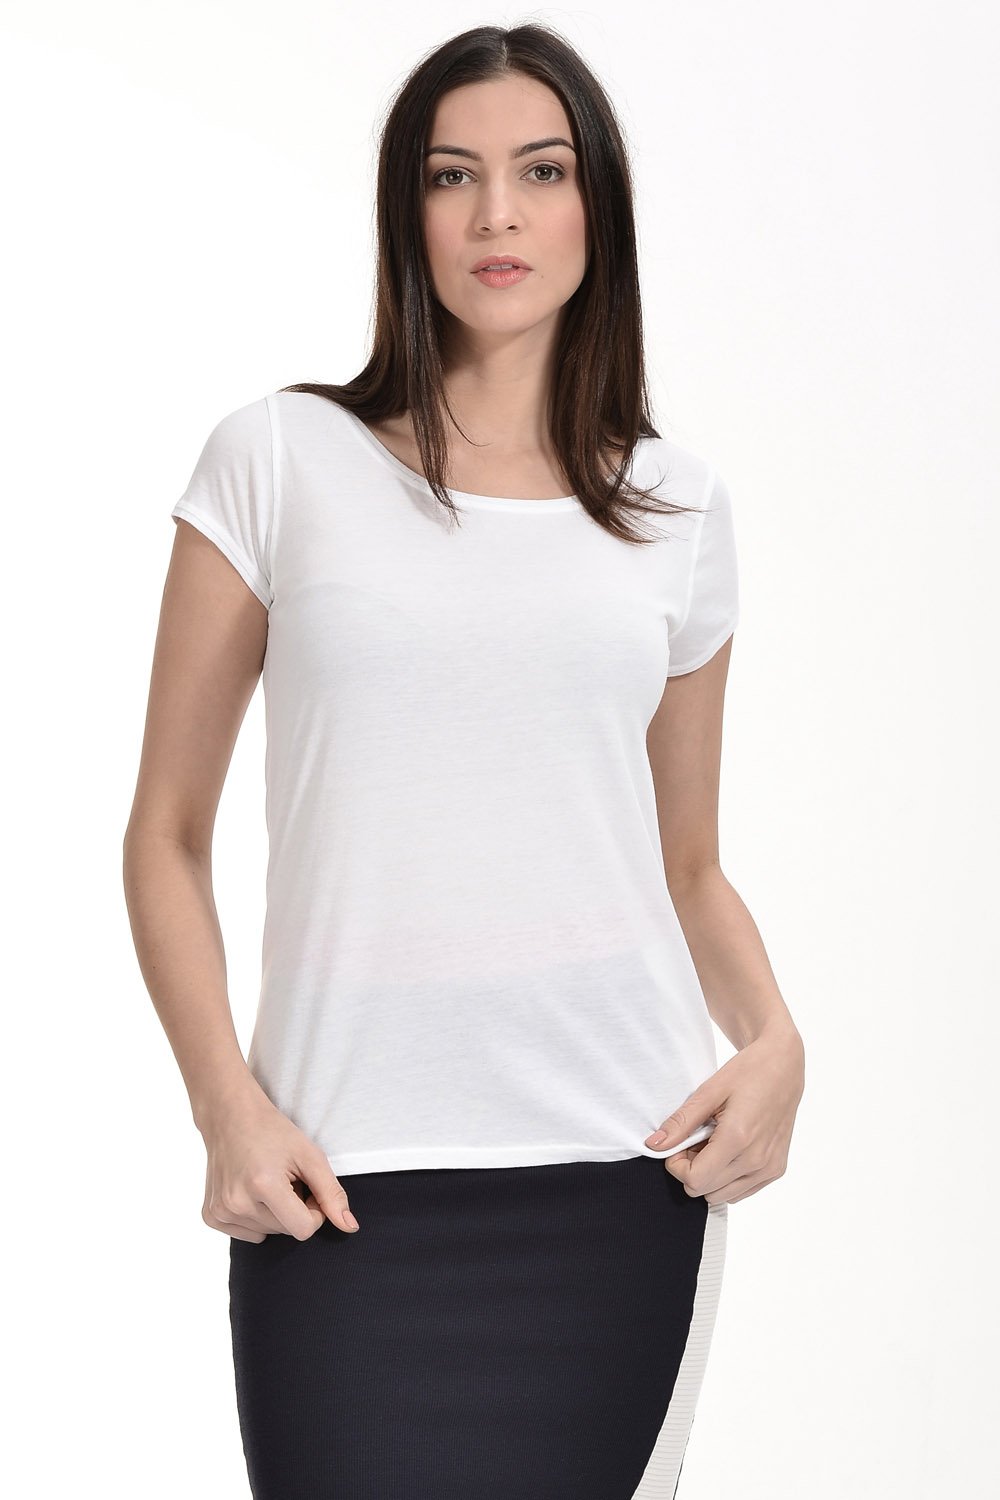 Cotton Candy Yuvarlak Yaka Kısa Kol Basic Kadın T-Shirt - Beyaz